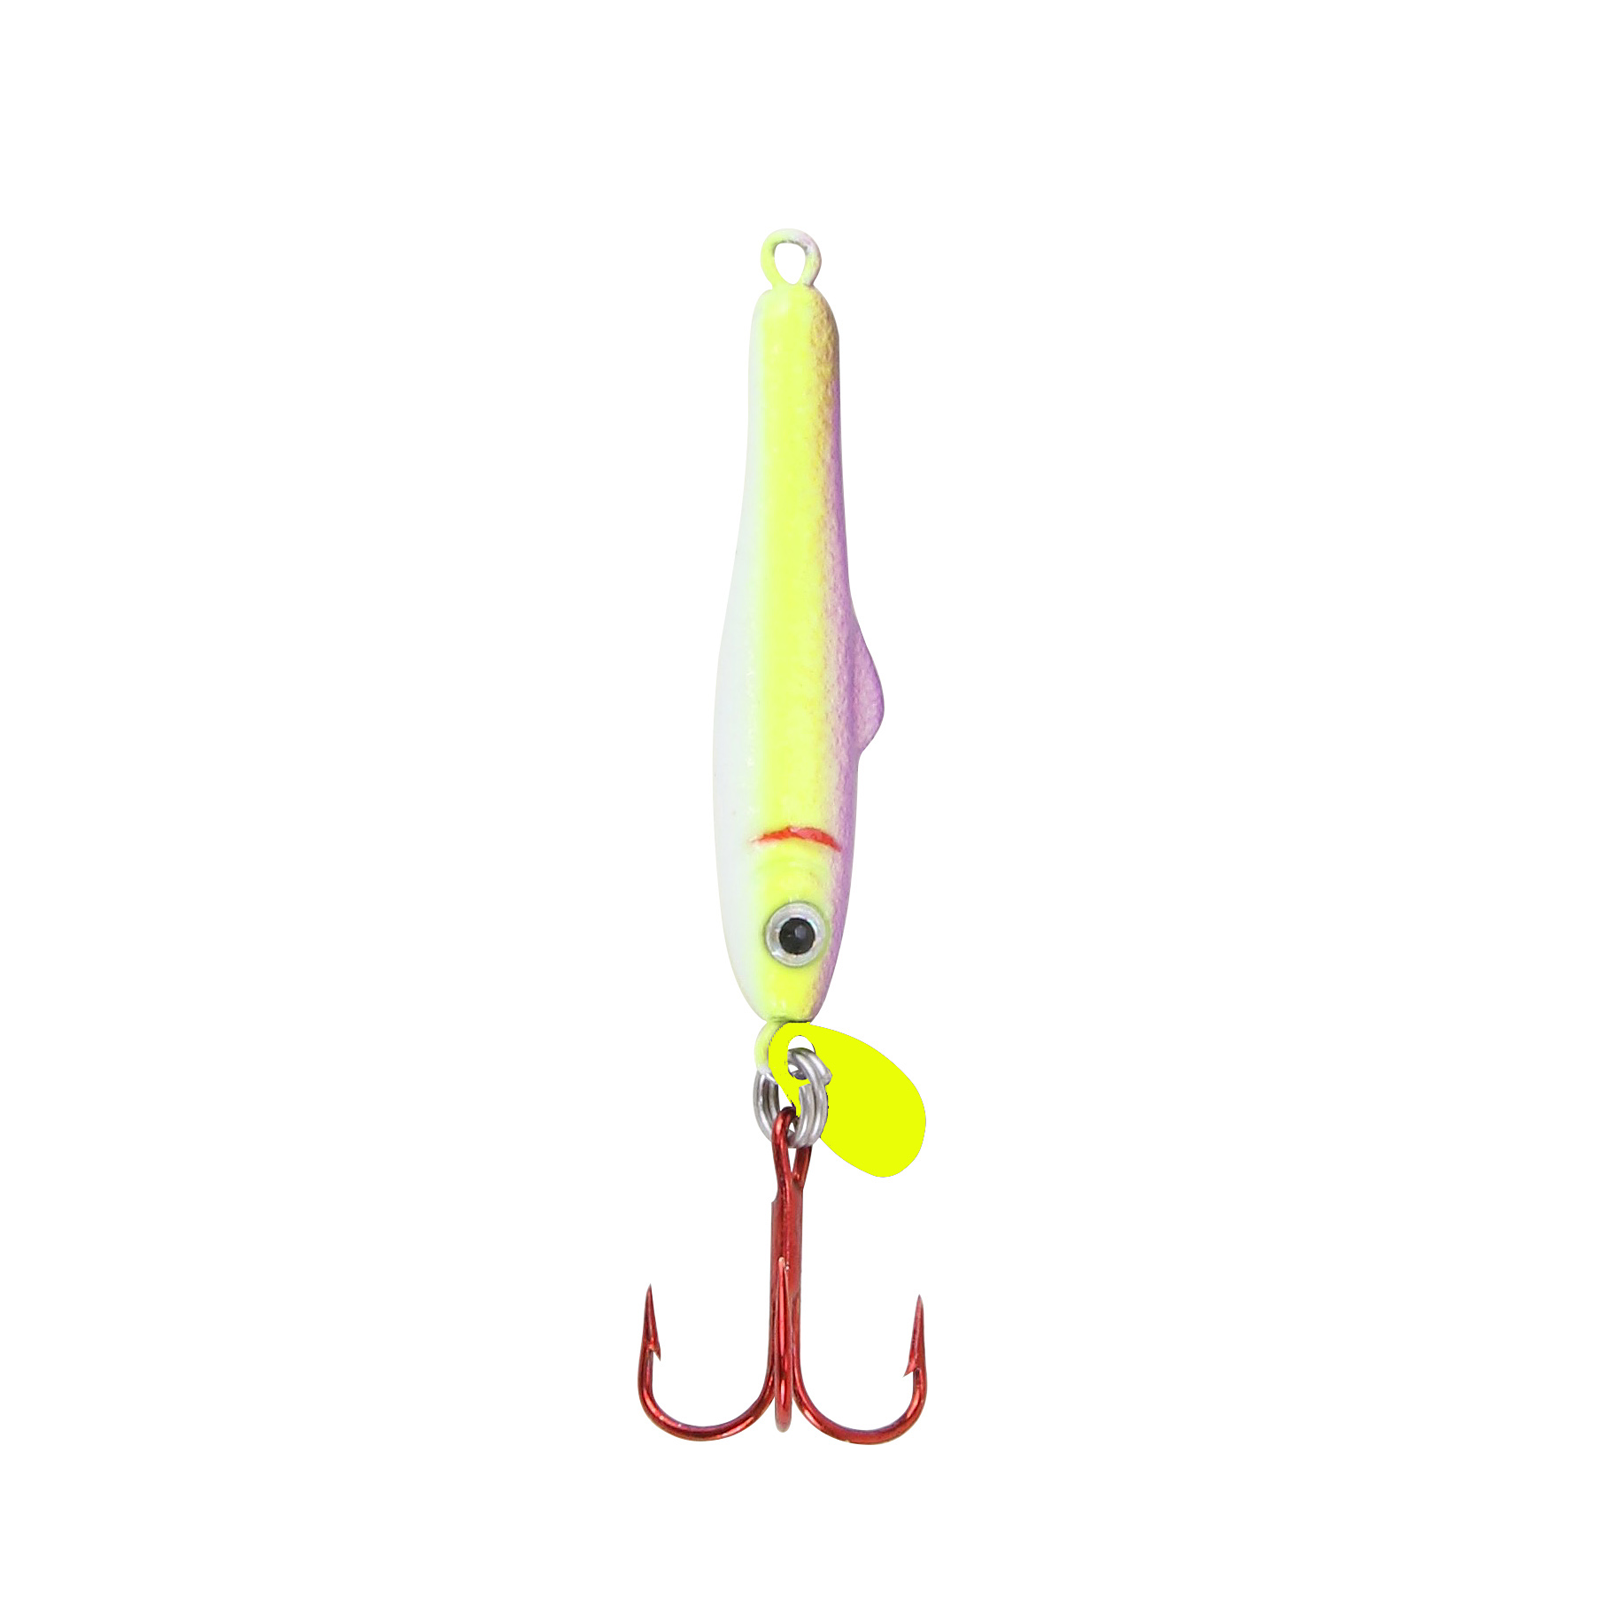 Clam 1/4 oz Pinhead Jigging Mino Spoon Glow Ice Fishing (3) Piece Kit -  NEW!